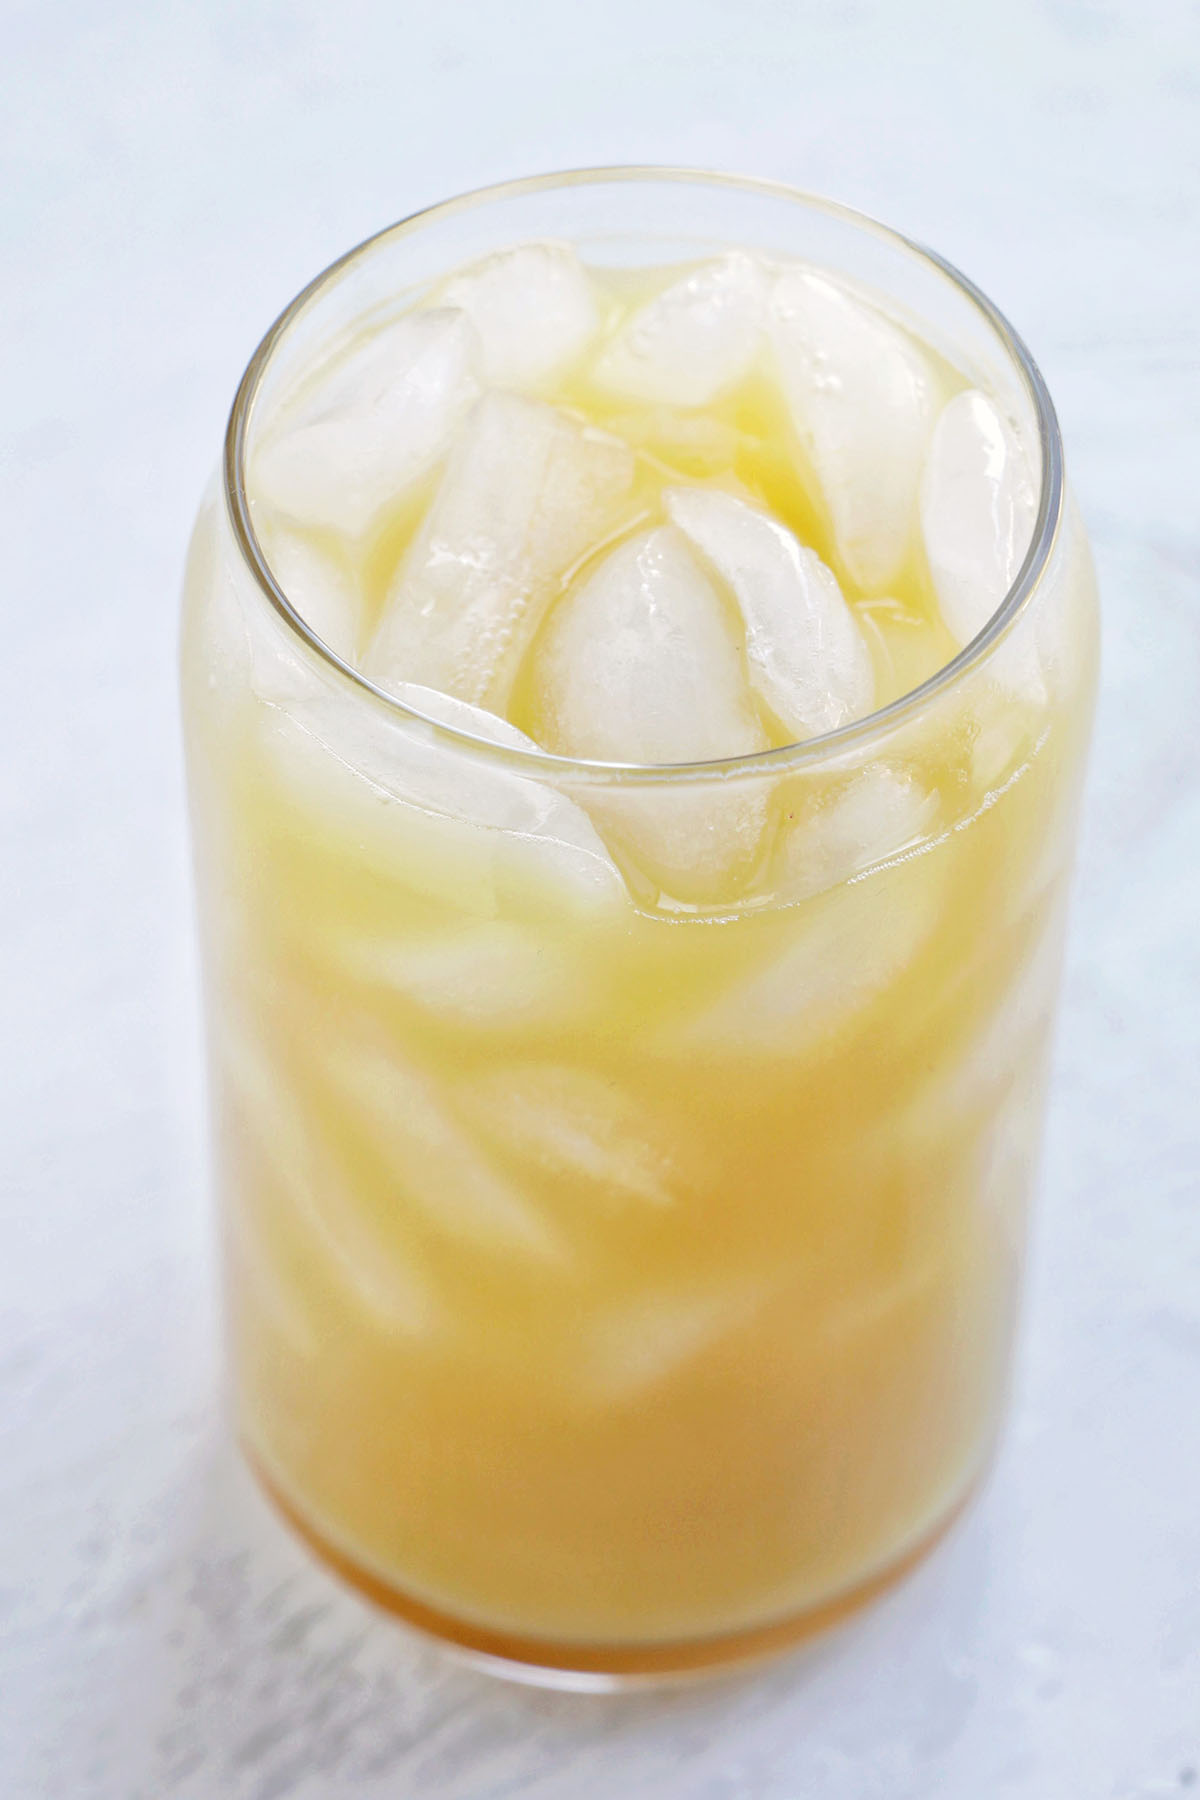 rum and pineapple juice drink.